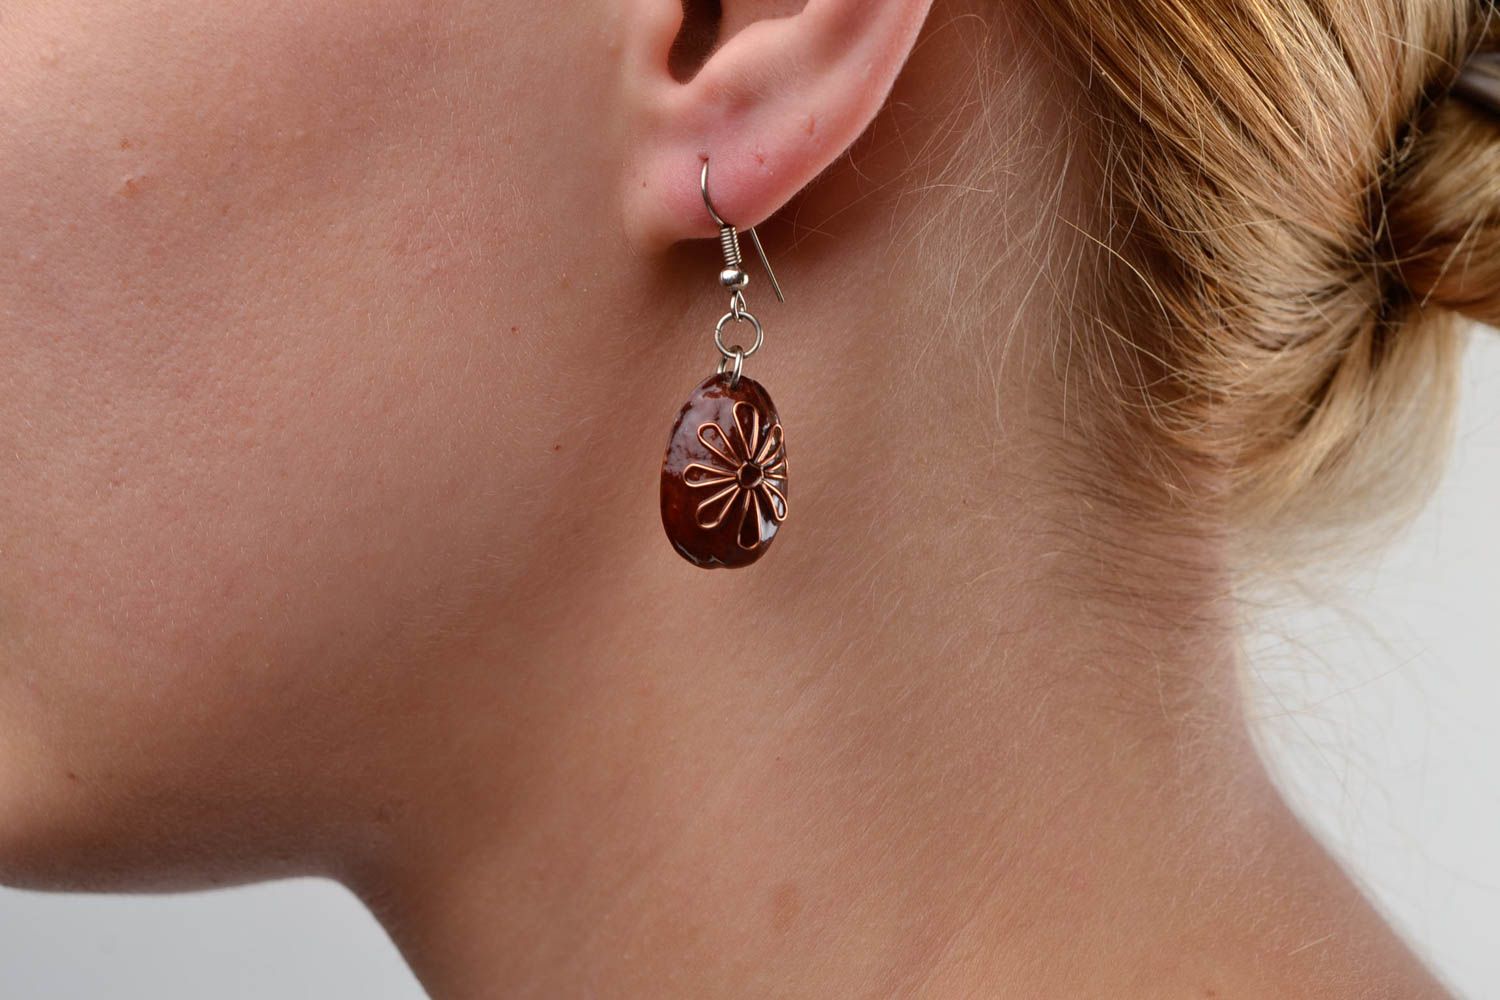 Wood earrings cool earrings homemade jewelry wooden earrings best gifts for her photo 1